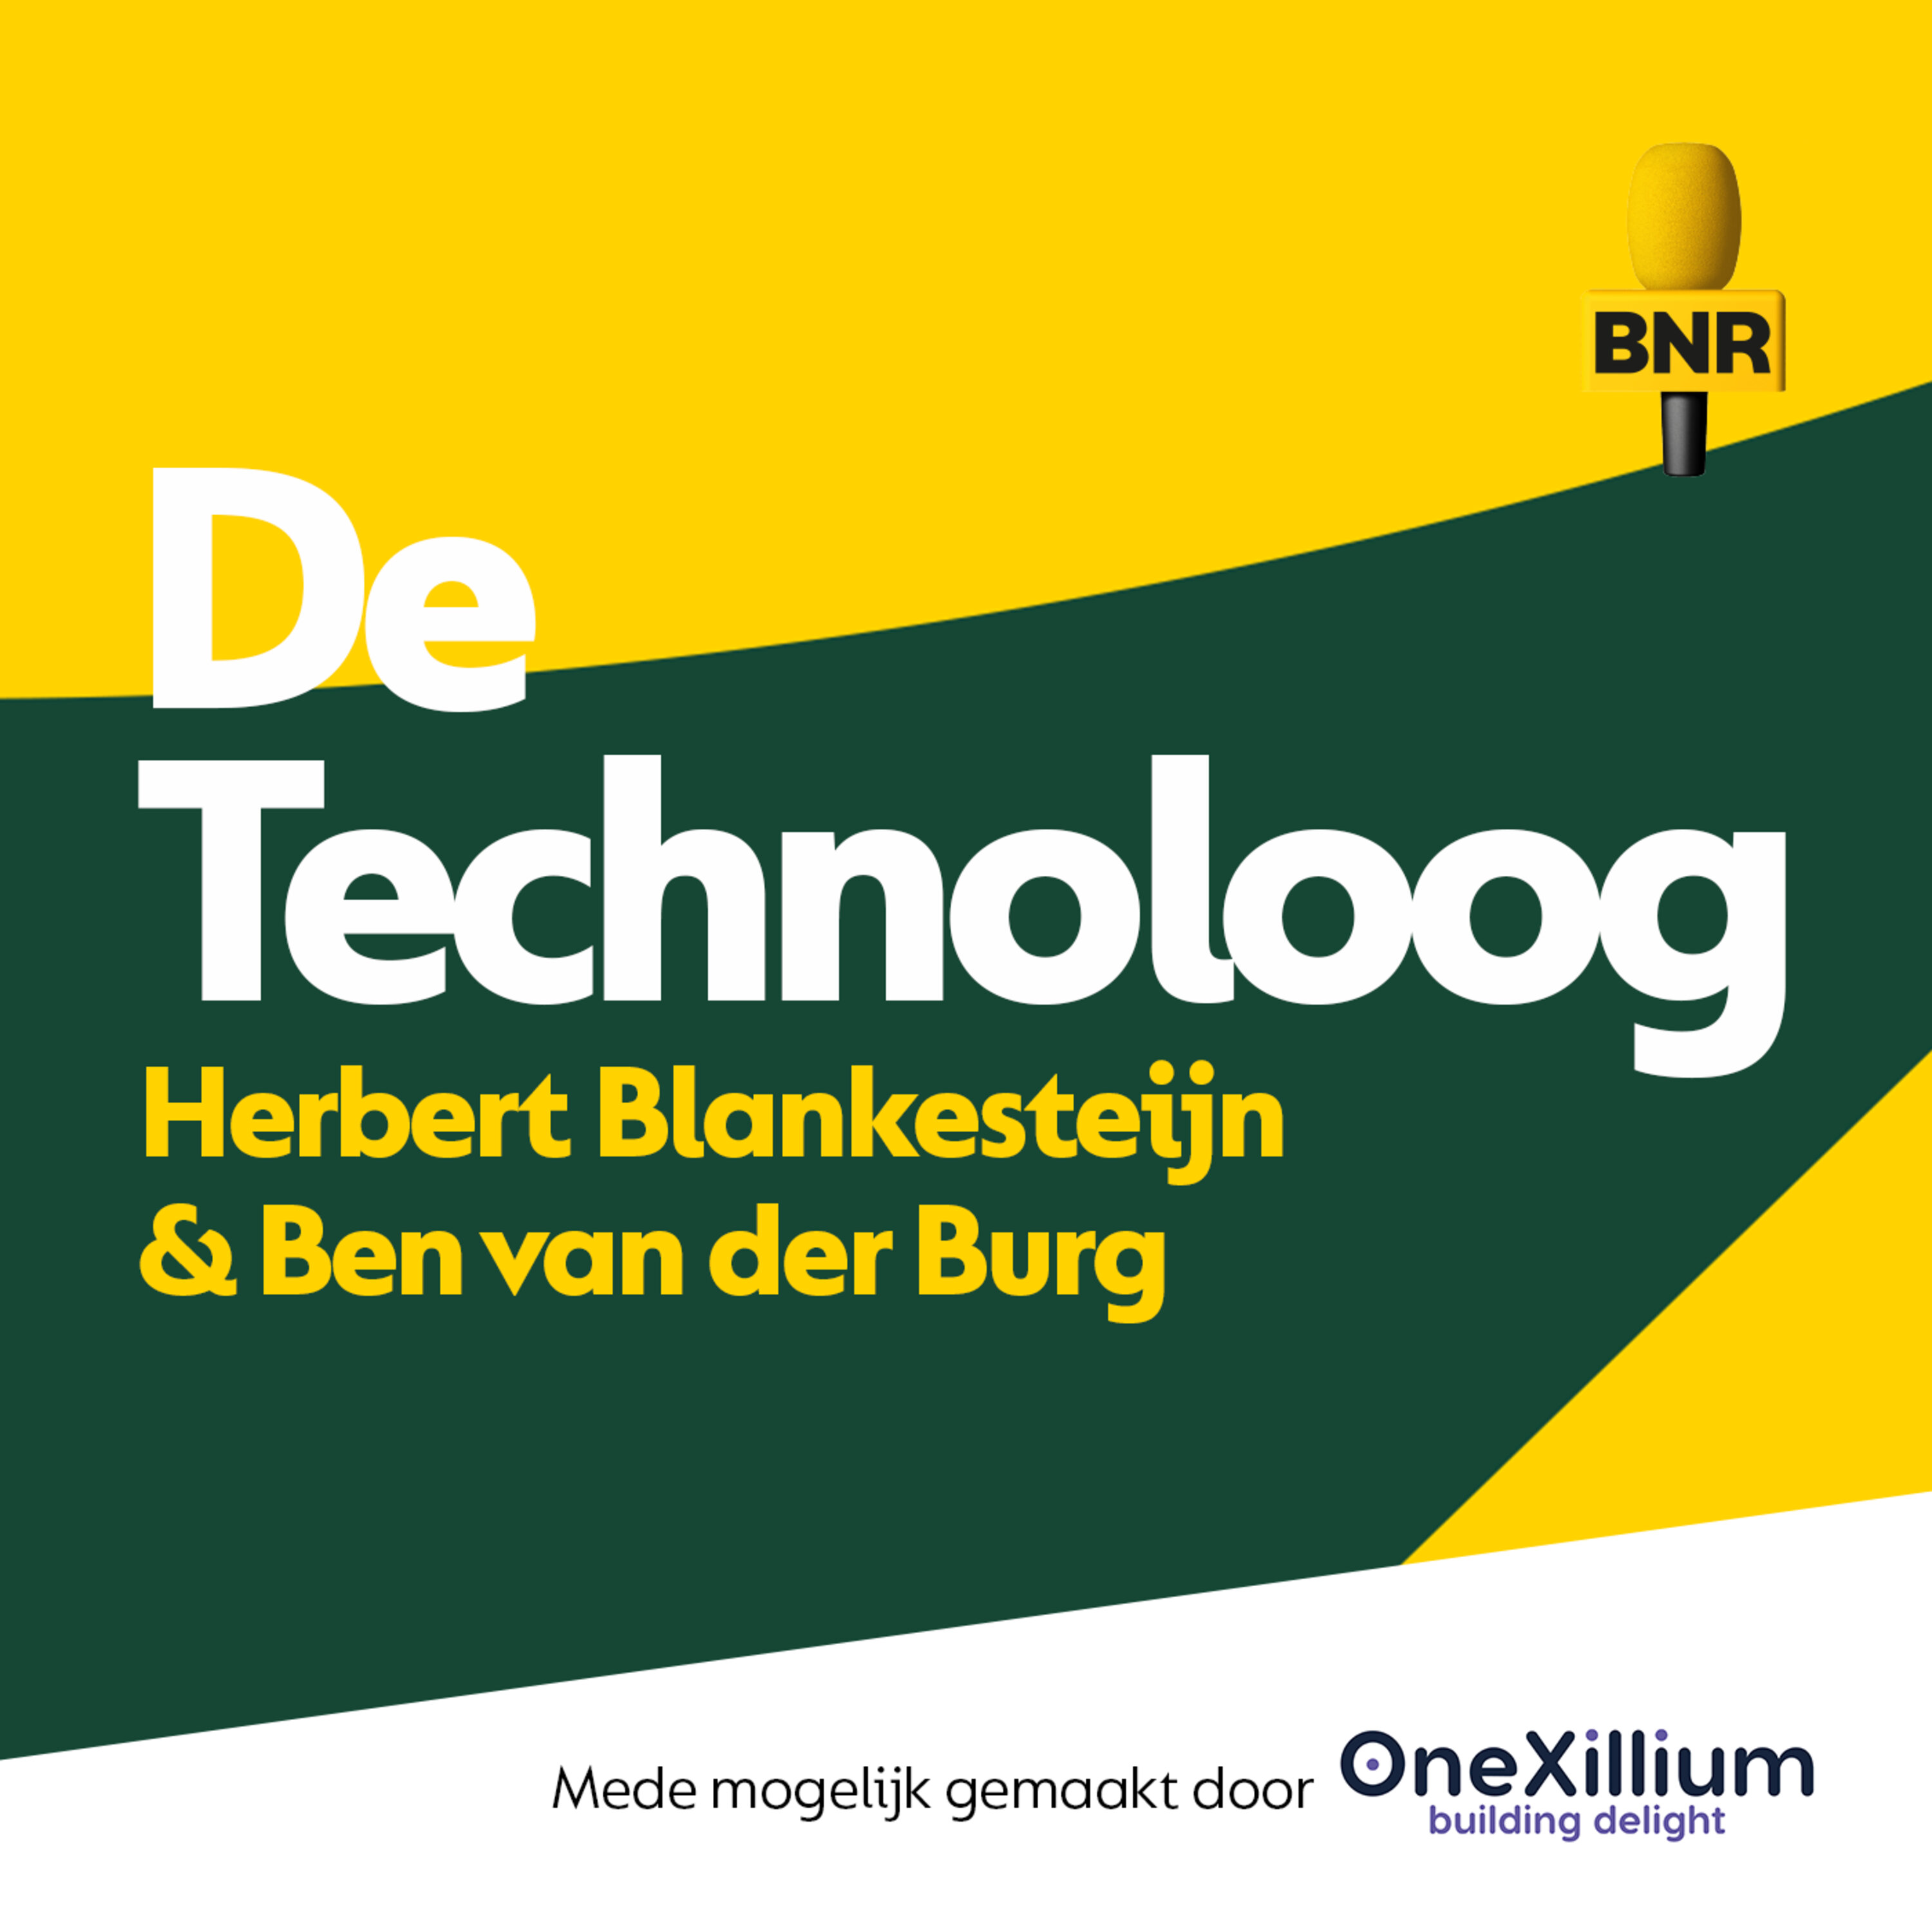 De Technoloog | BNR:BNR Nieuwsradio